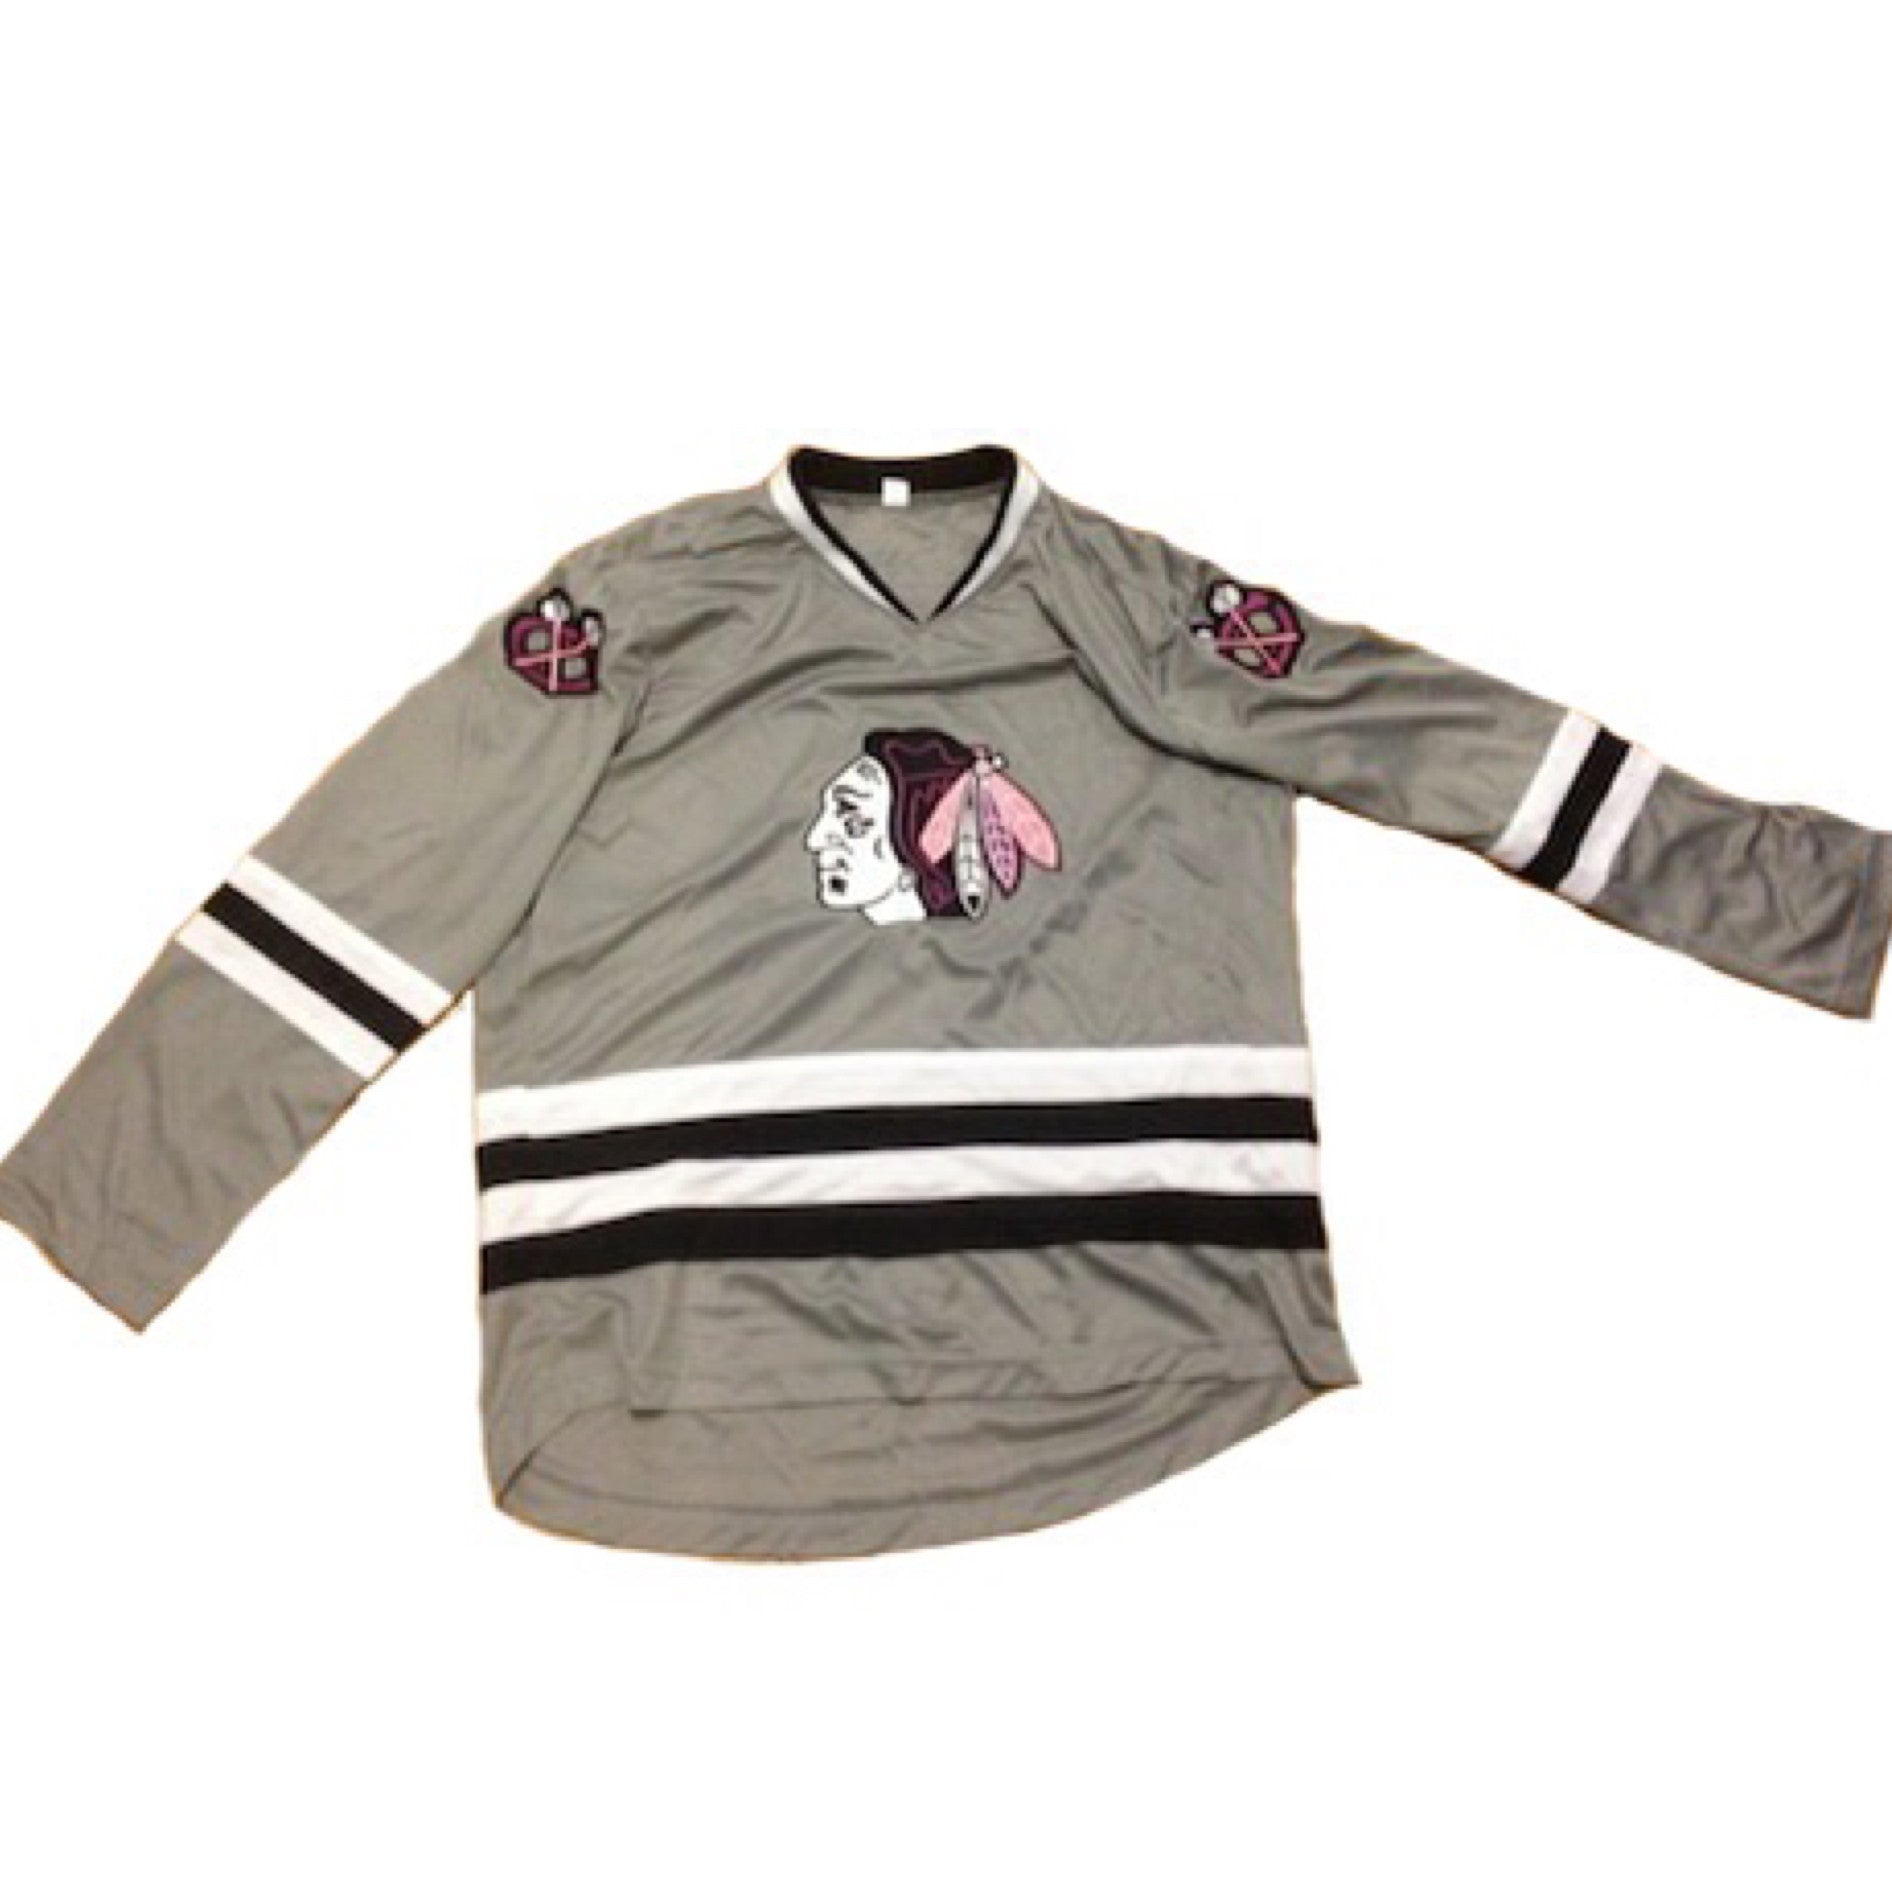 blackhawks pink jersey